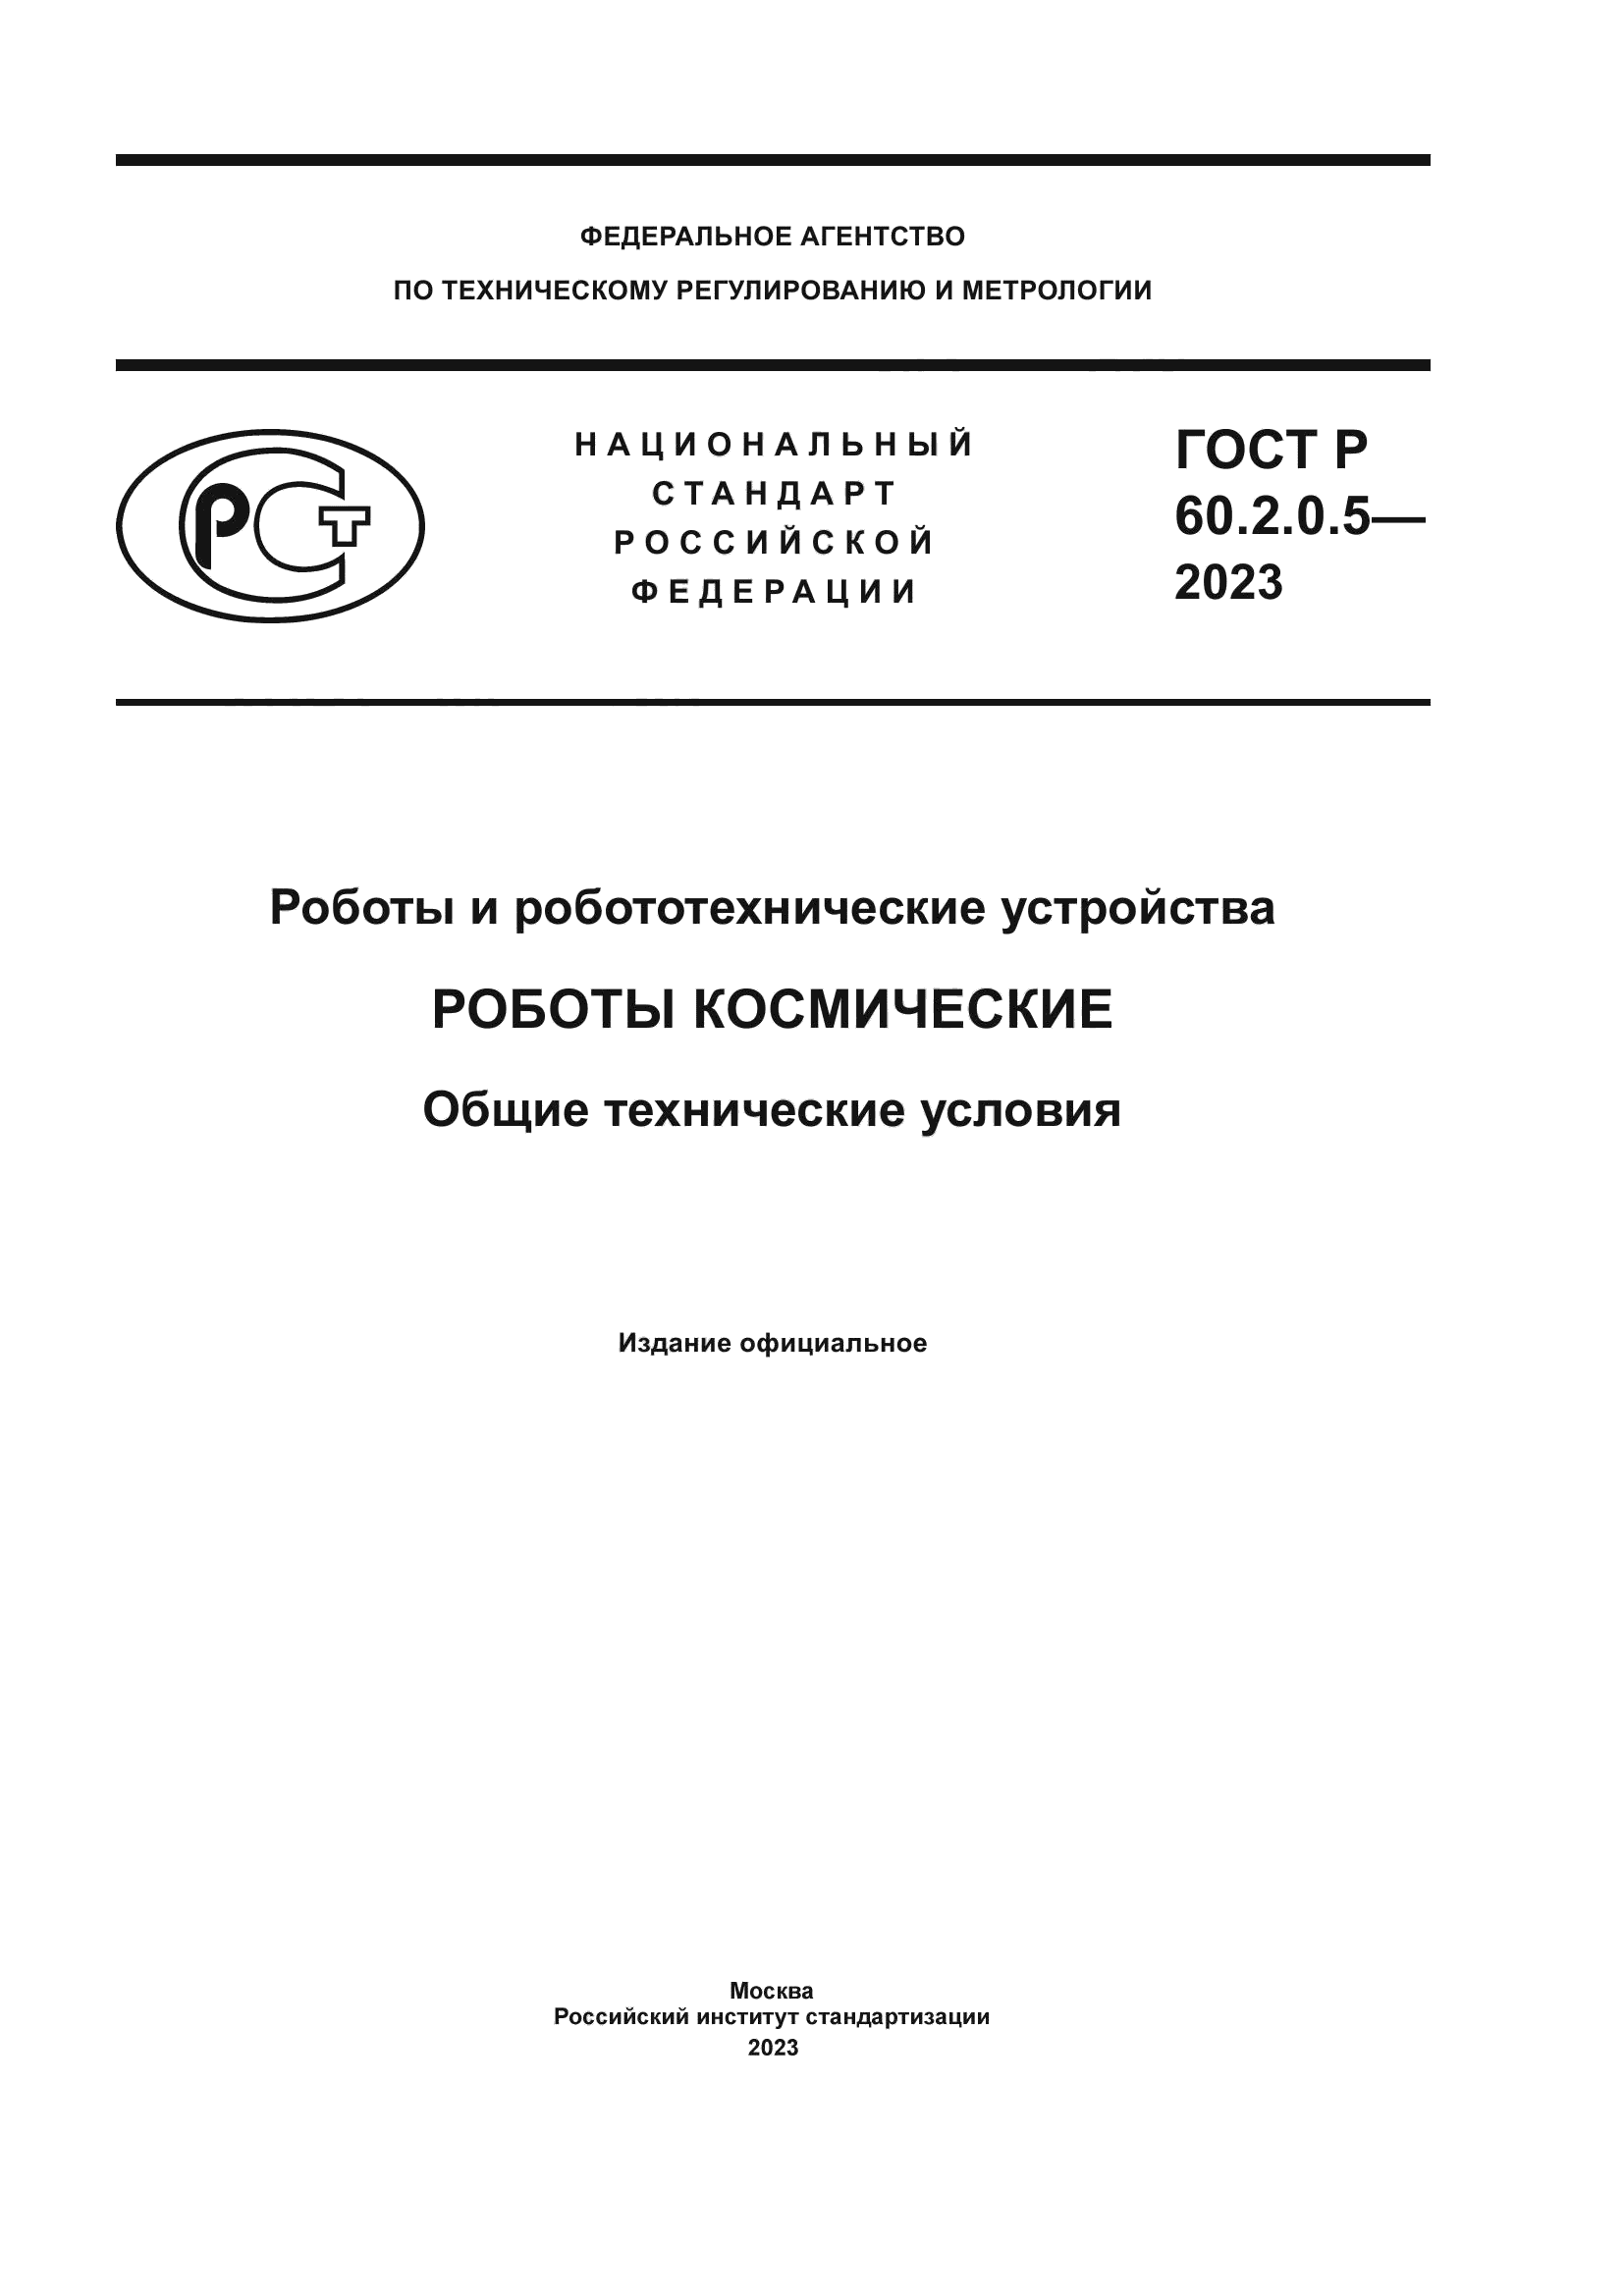 ГОСТ Р 60.2.0.5-2023